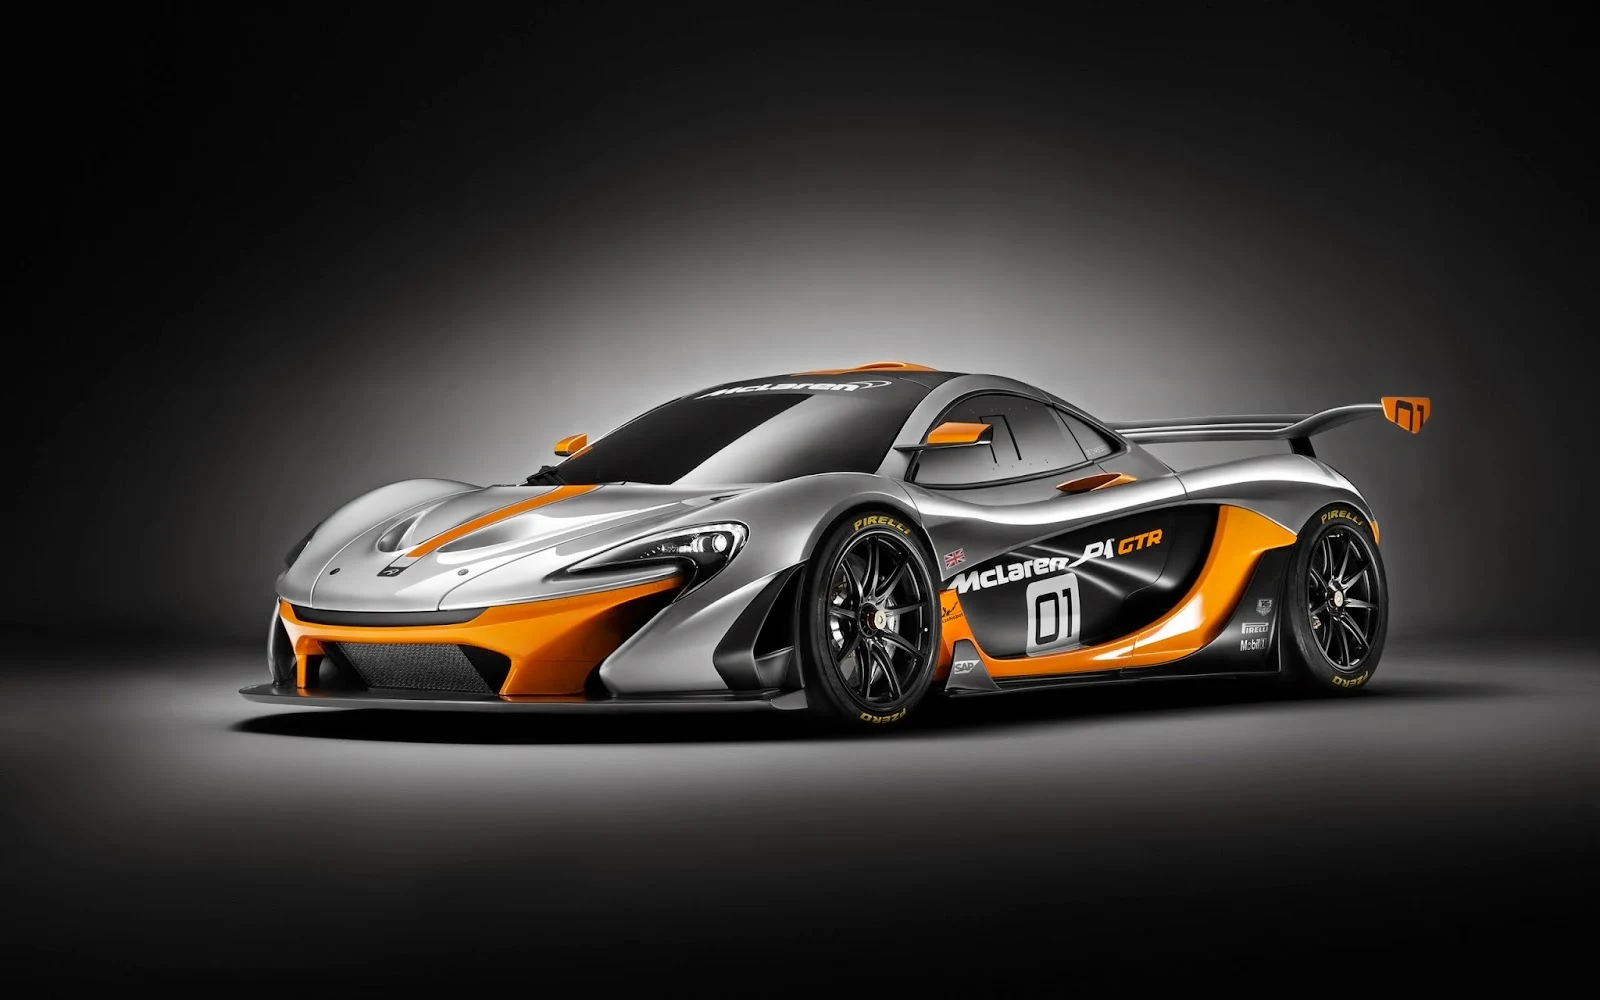  2014 McLaren P1 GTR Concept